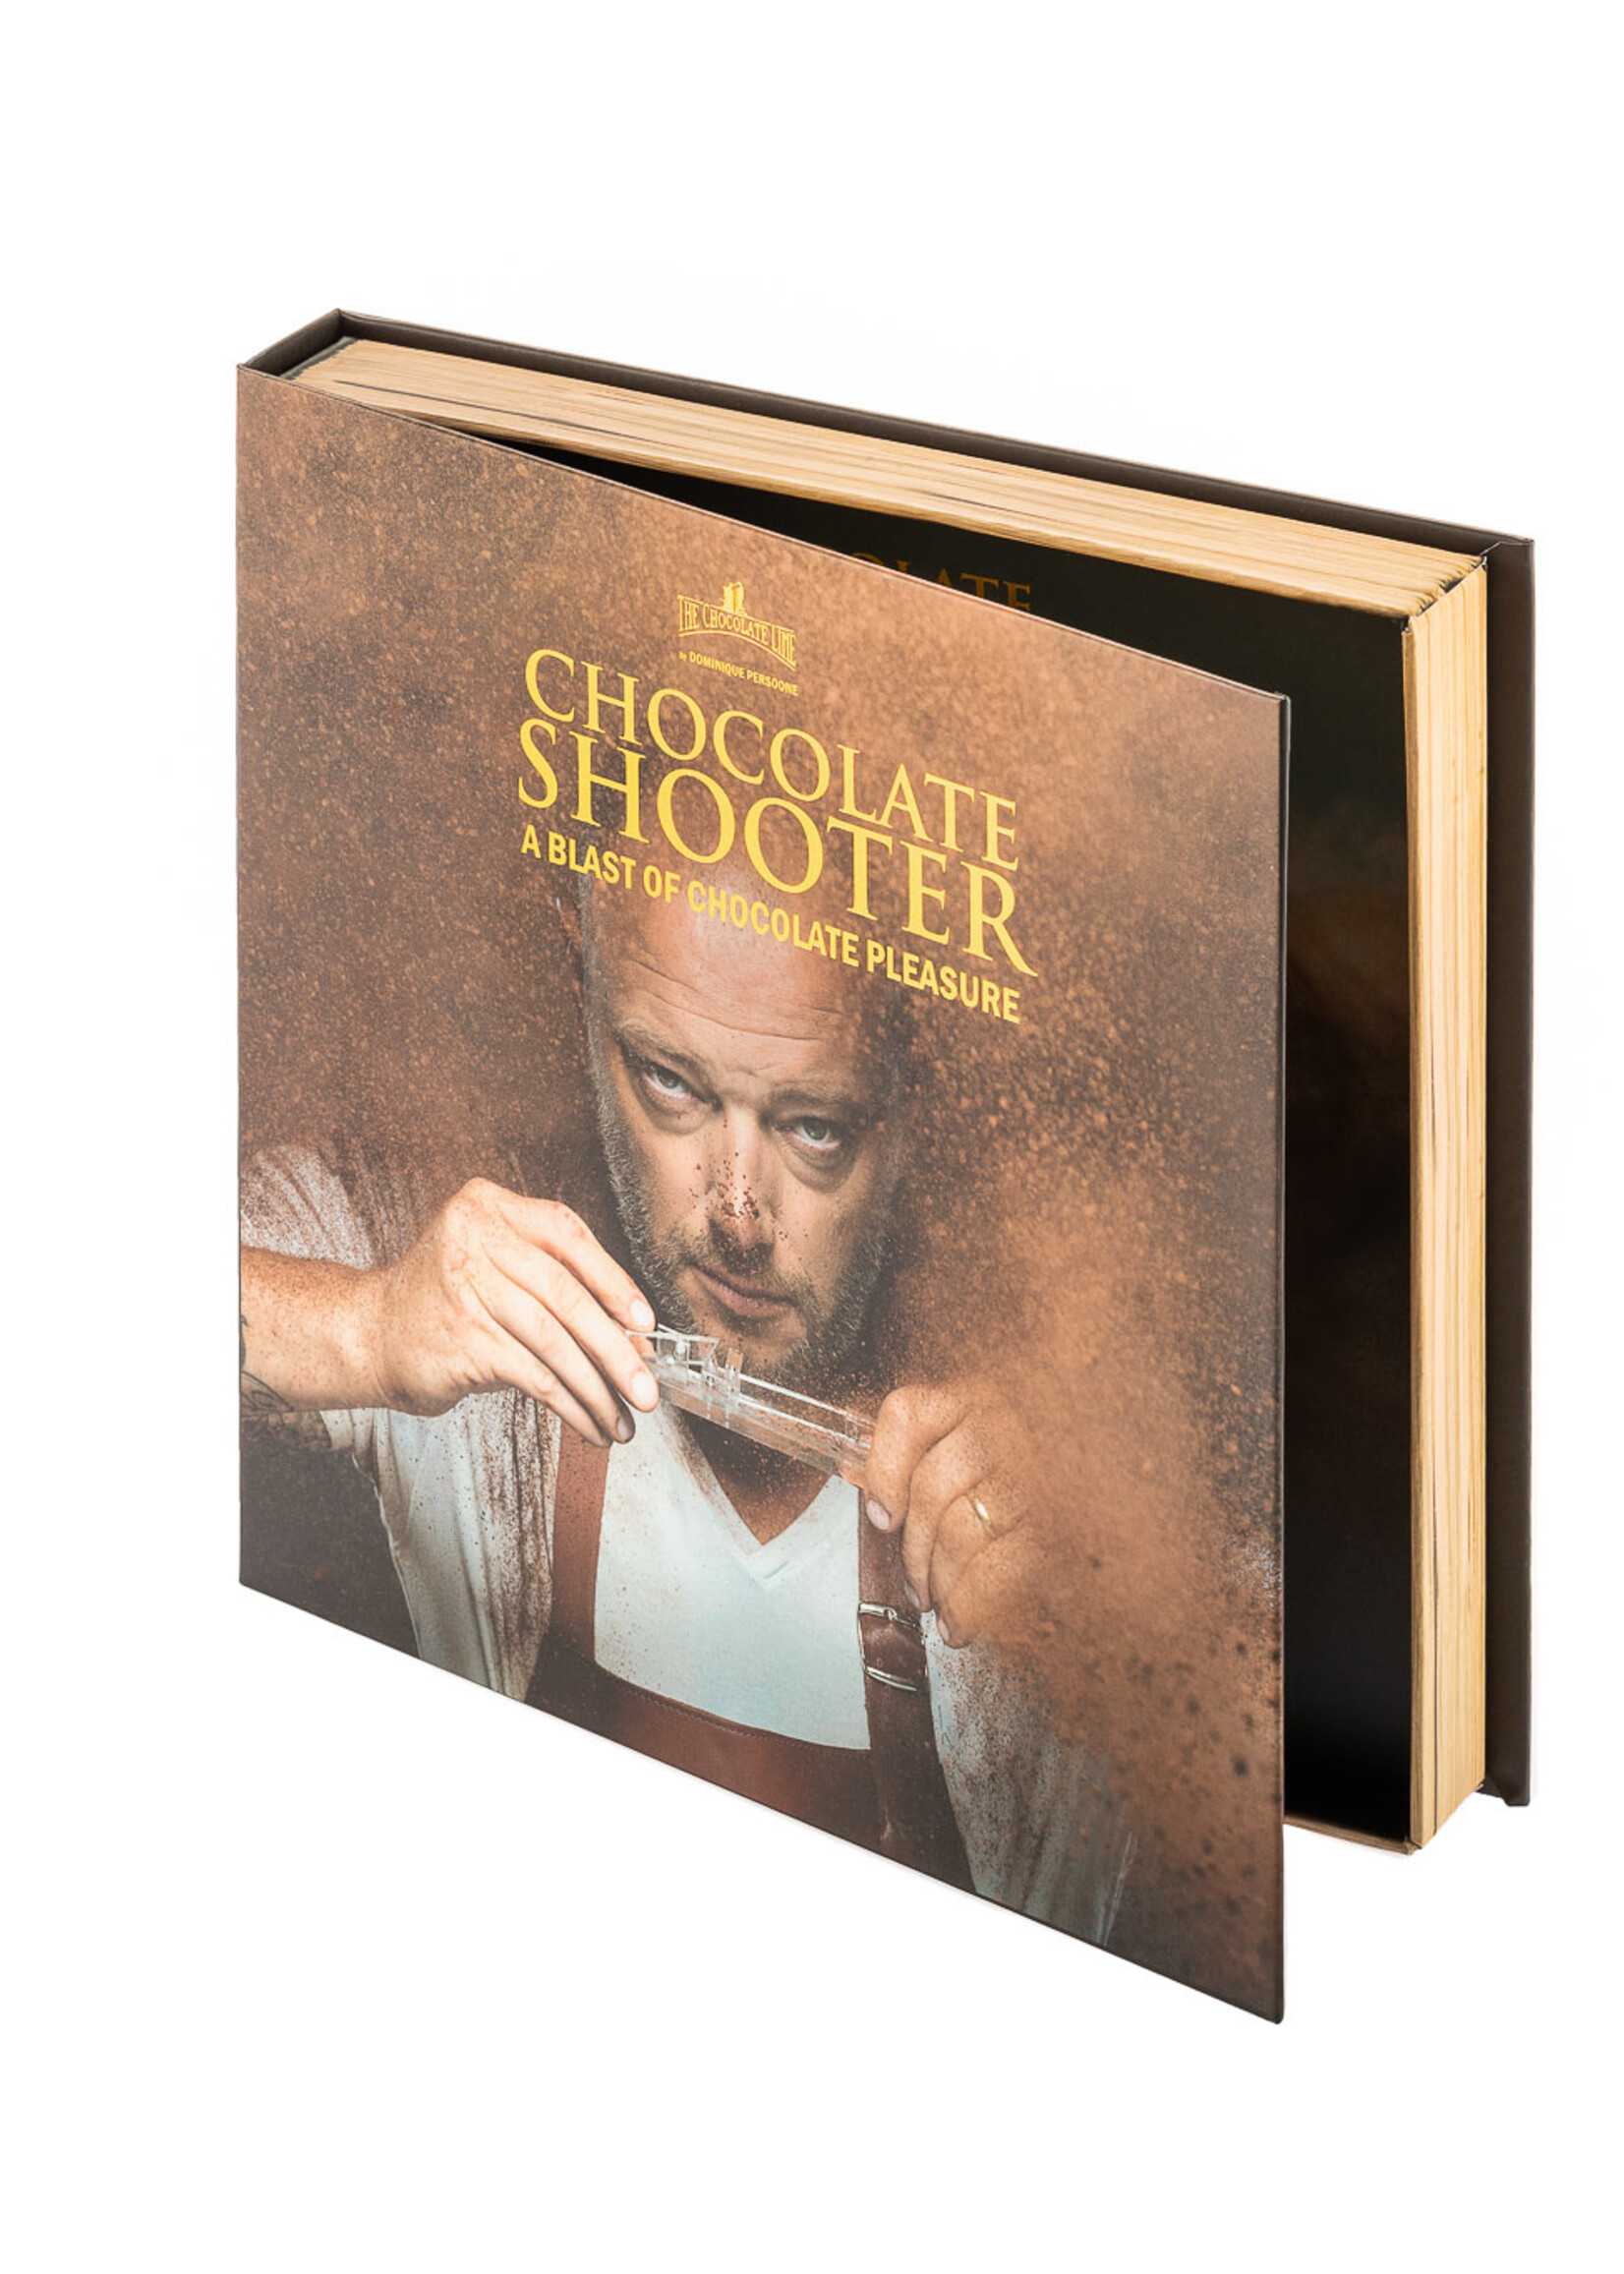 The Chocolate Line Chocolate Shooter